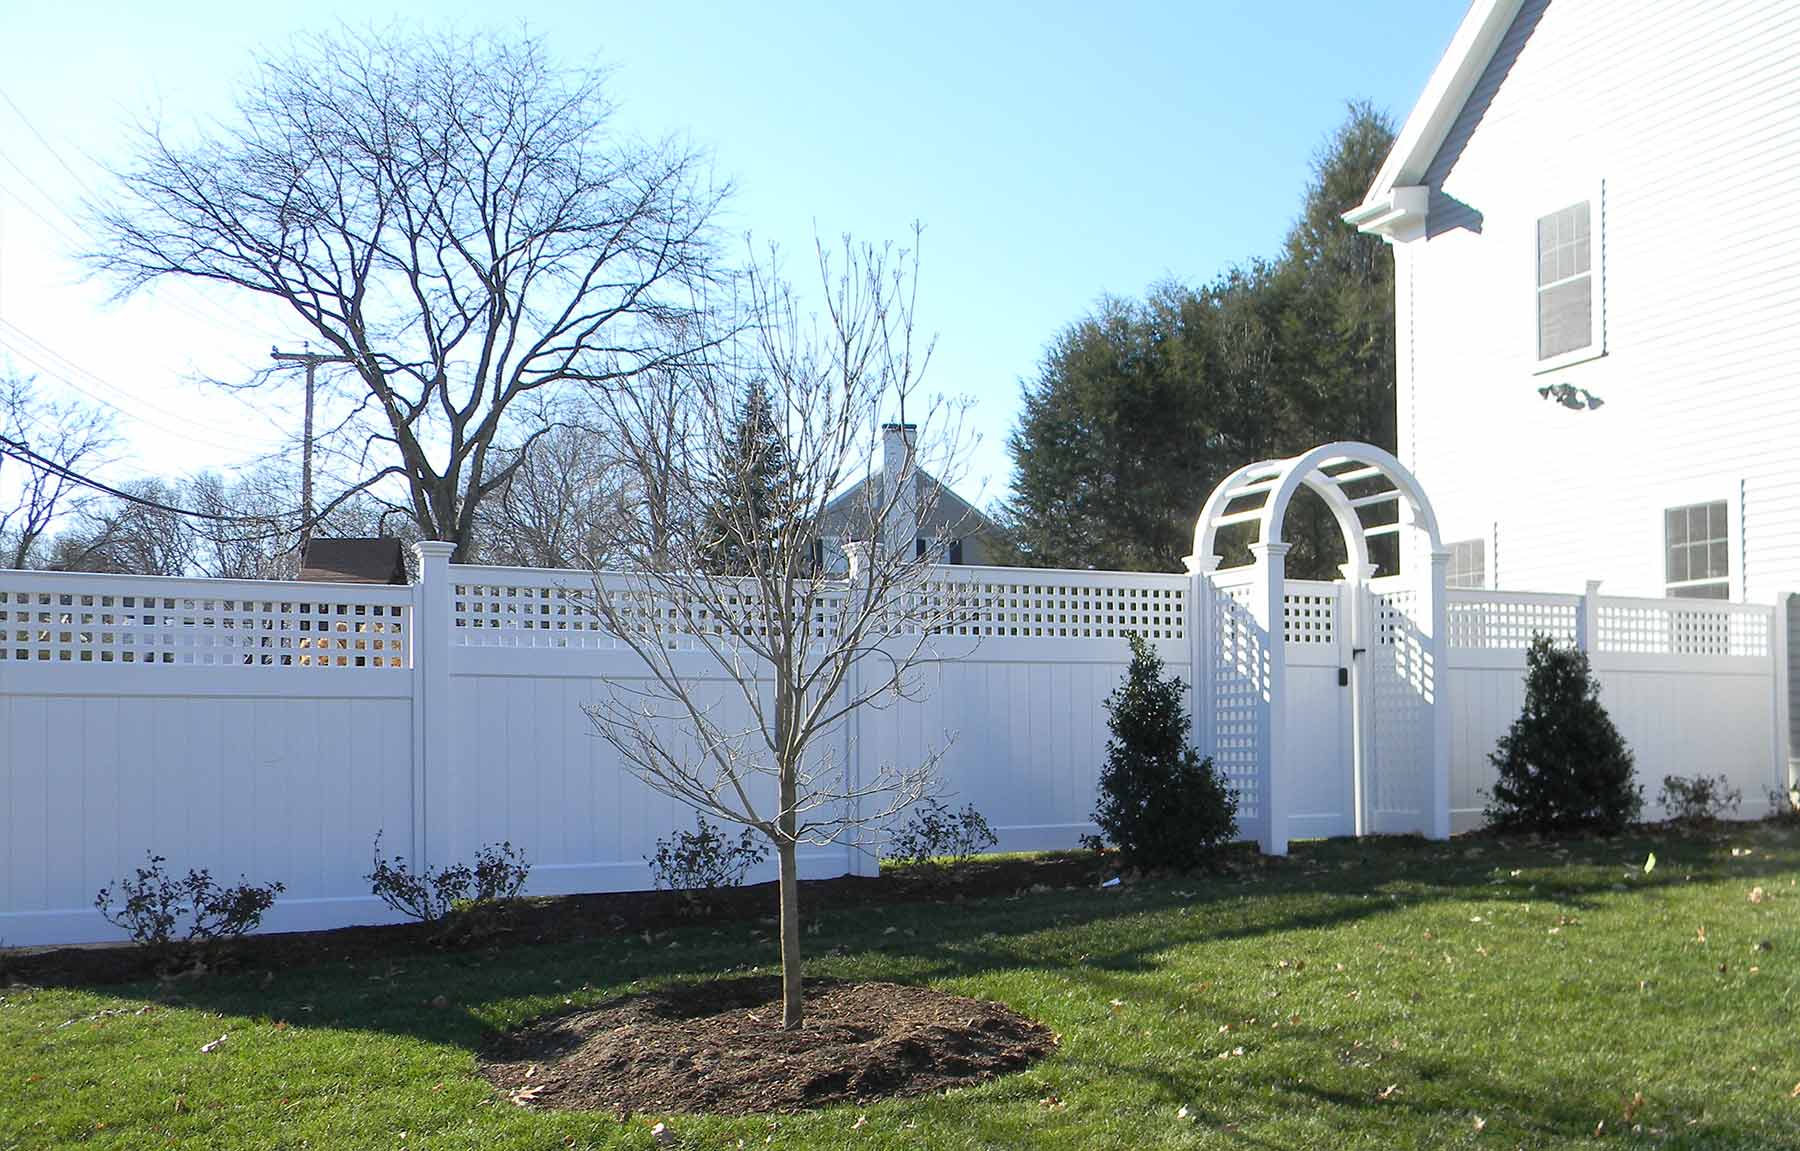 Fence Installation in Norfolk, Massachusetts - Bottom 4